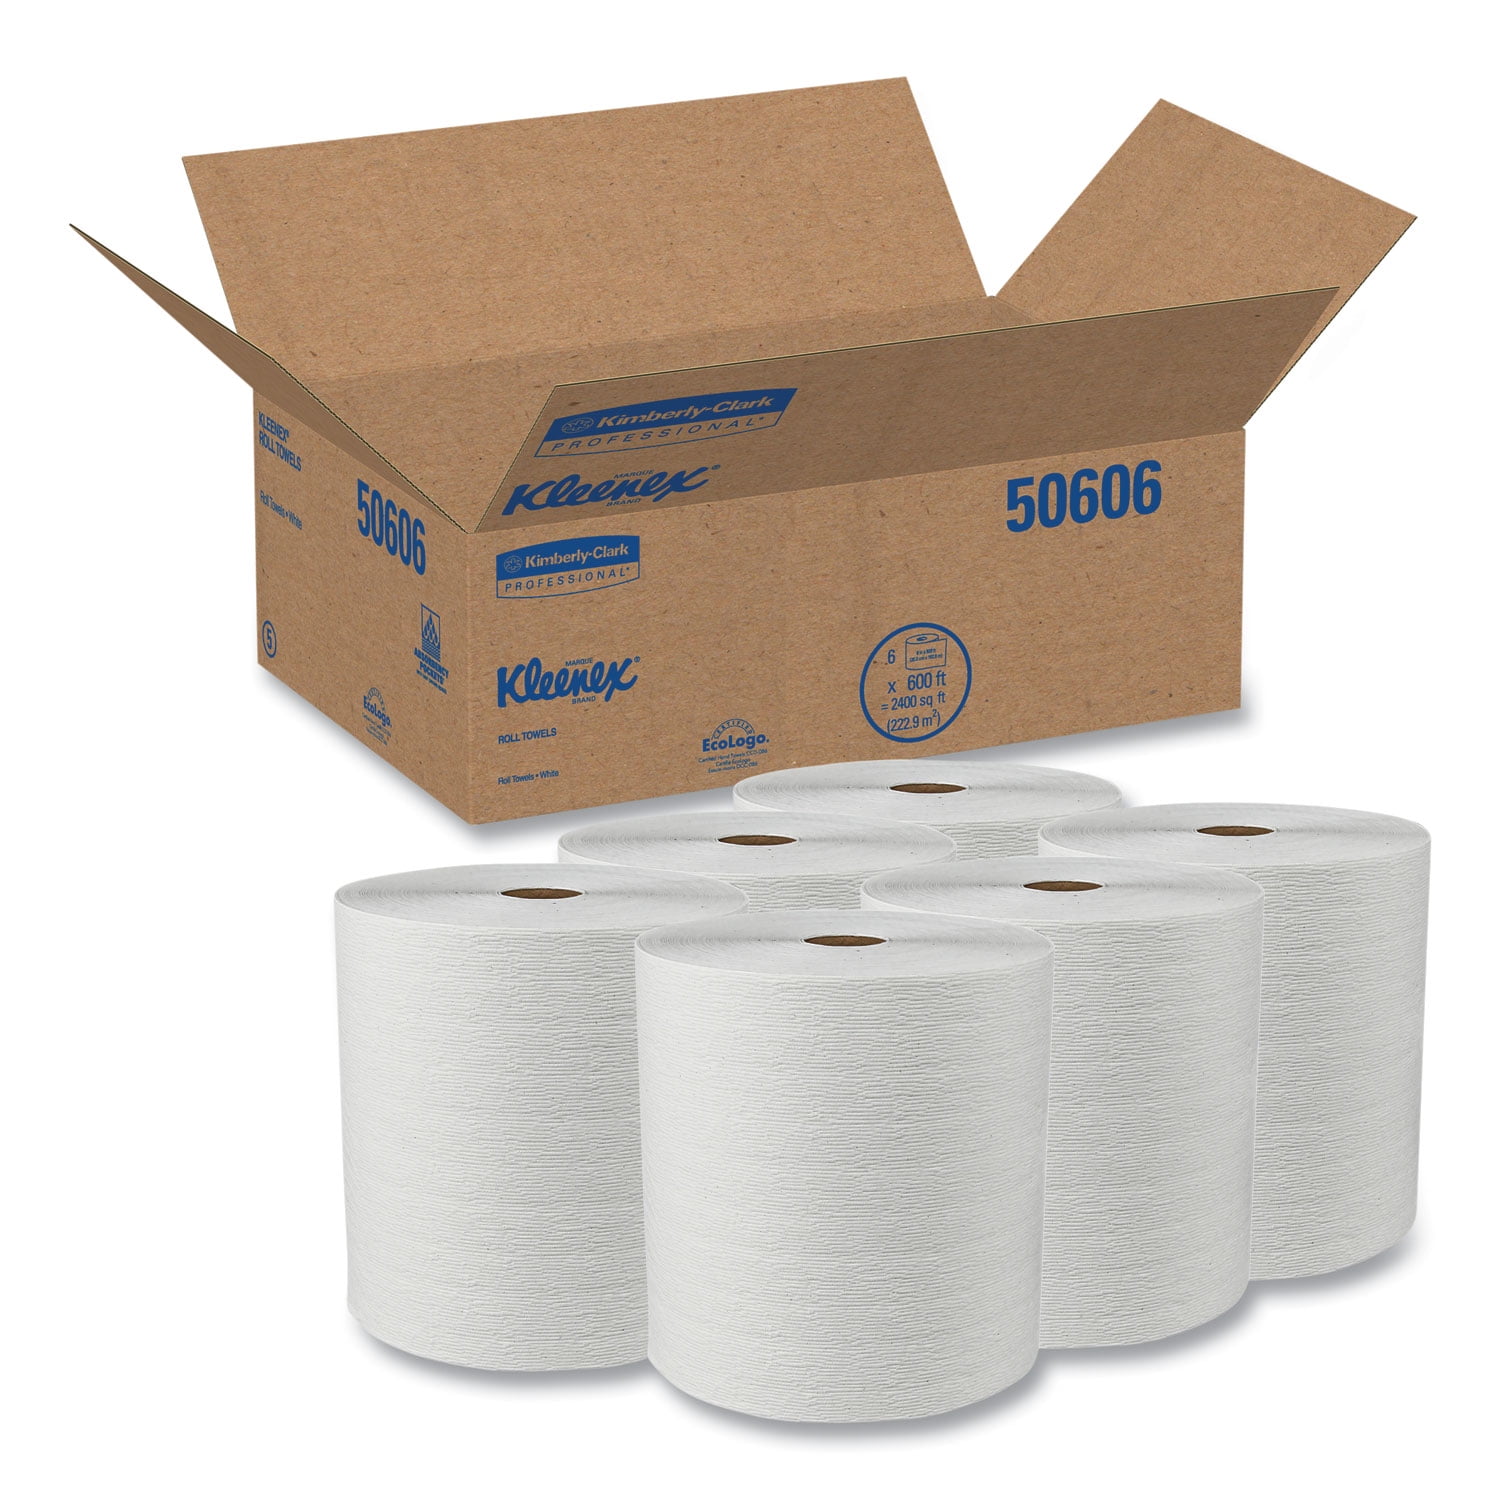 Windsoft , Premium Kitchen Roll Towels, 2-Ply, 6 x 11, White, 110/Roll, 12 Rolls/Carton